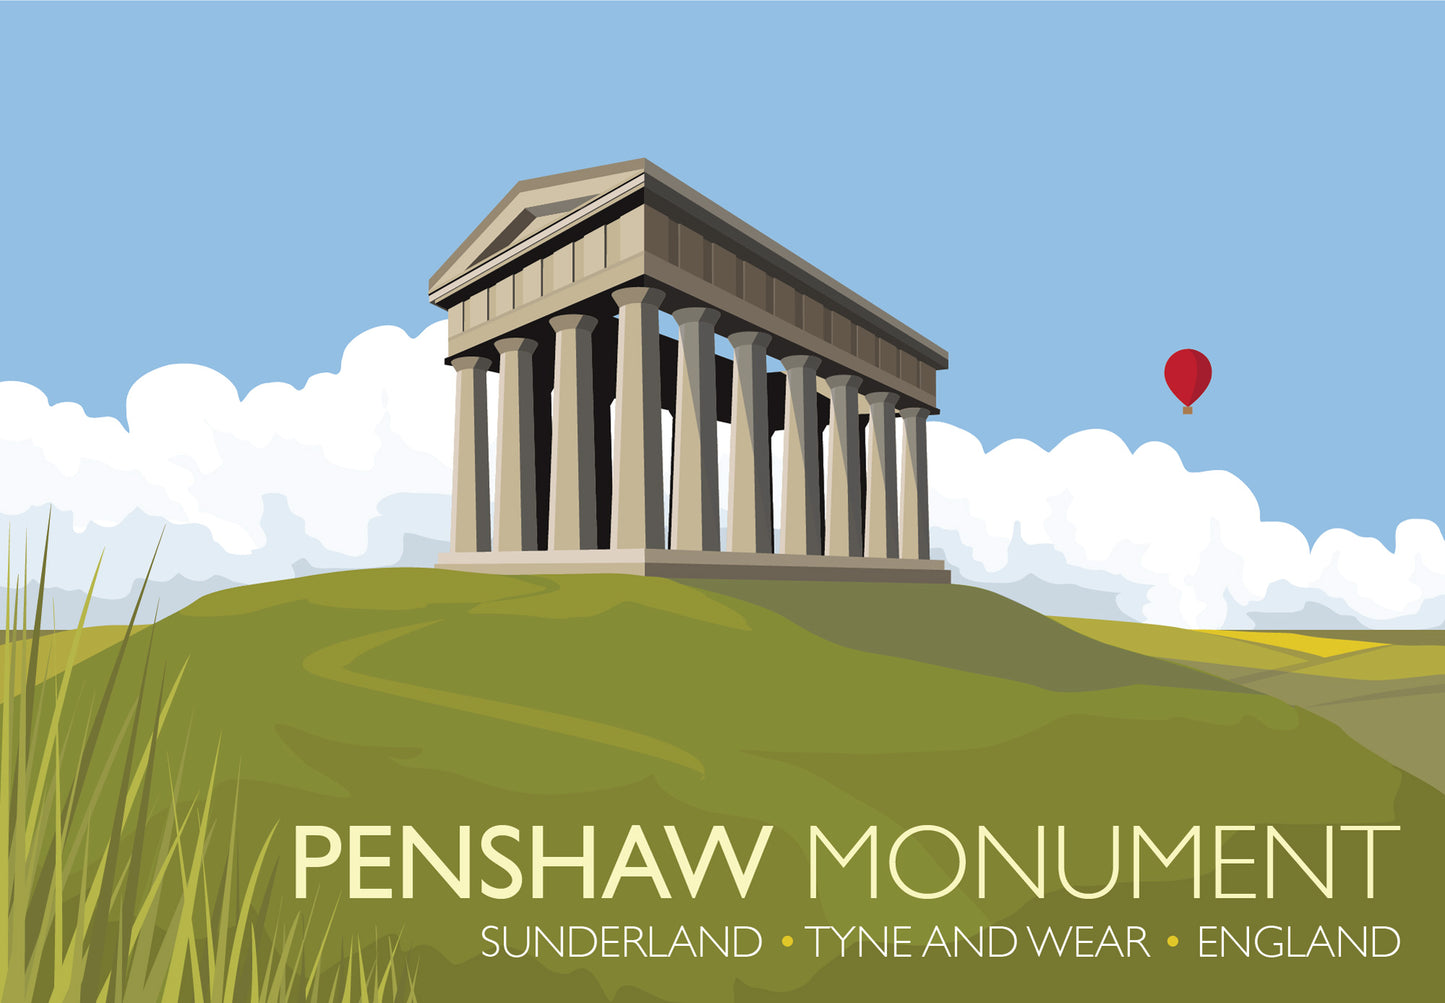 Penshaw Monument Travel Poster